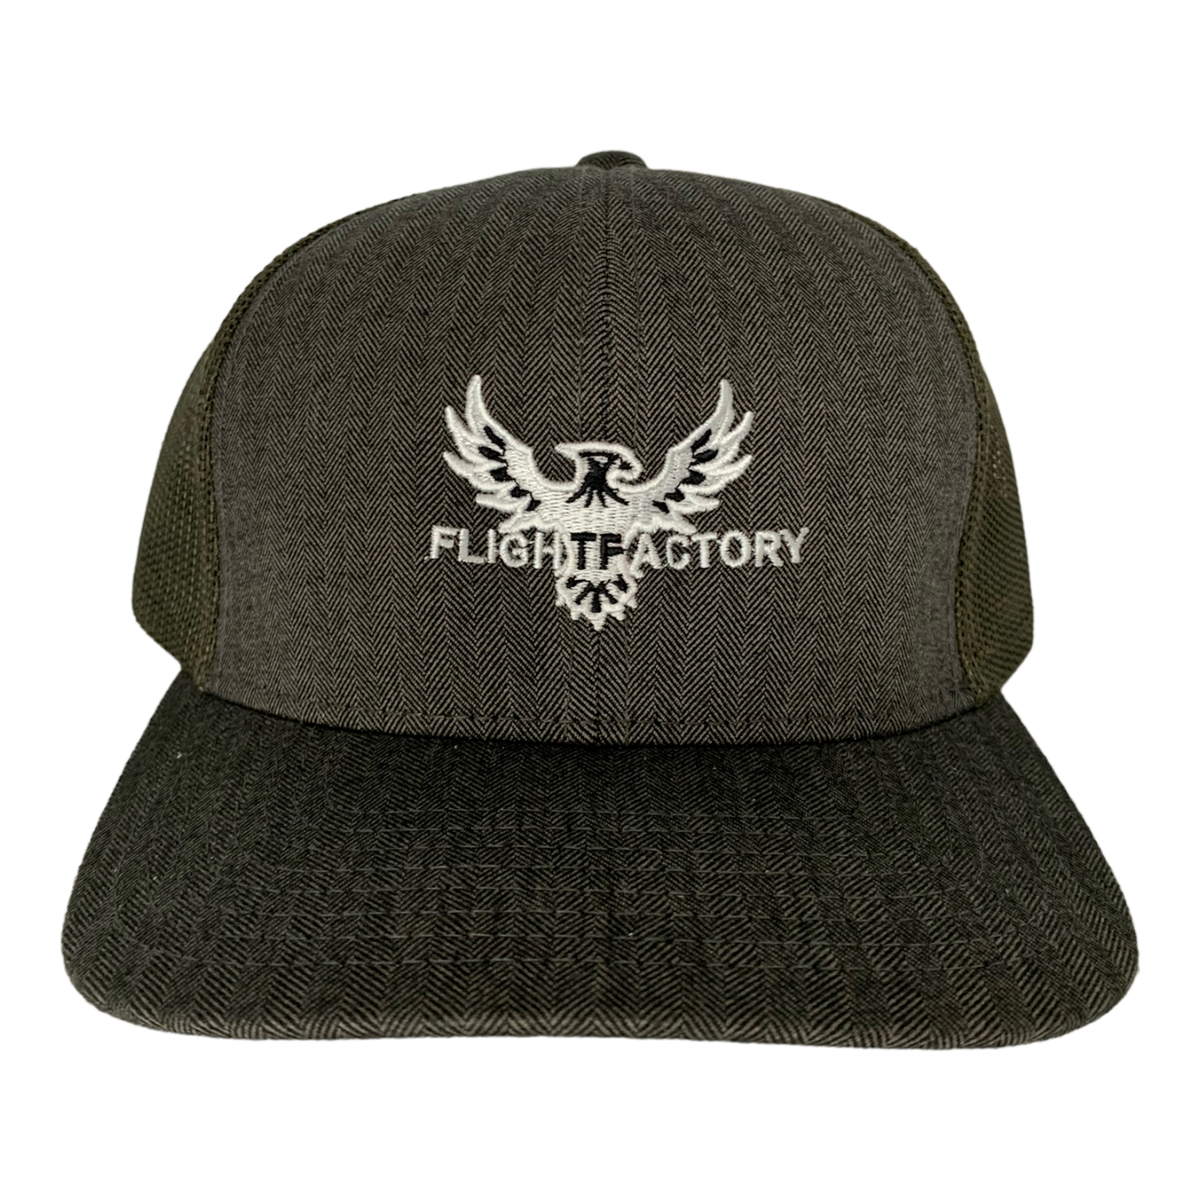 Flight Factory Herringbone Trucker Hats